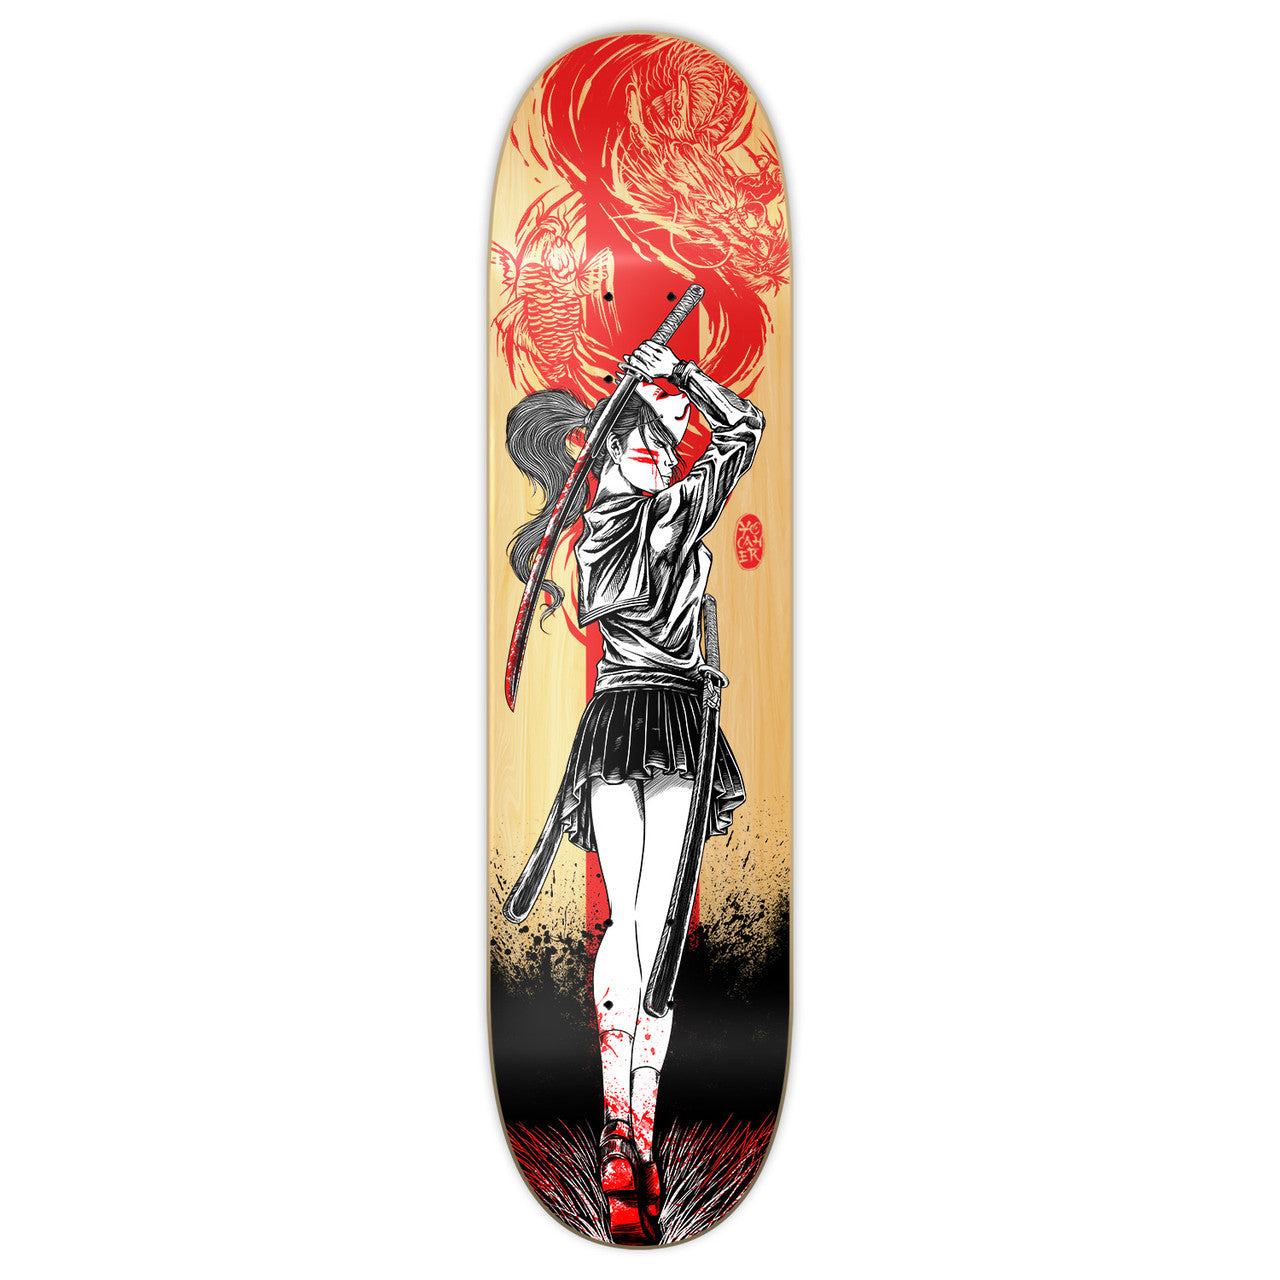 Yocaher Graphic Skateboard Deck  - Samurai Series - Red Dragon